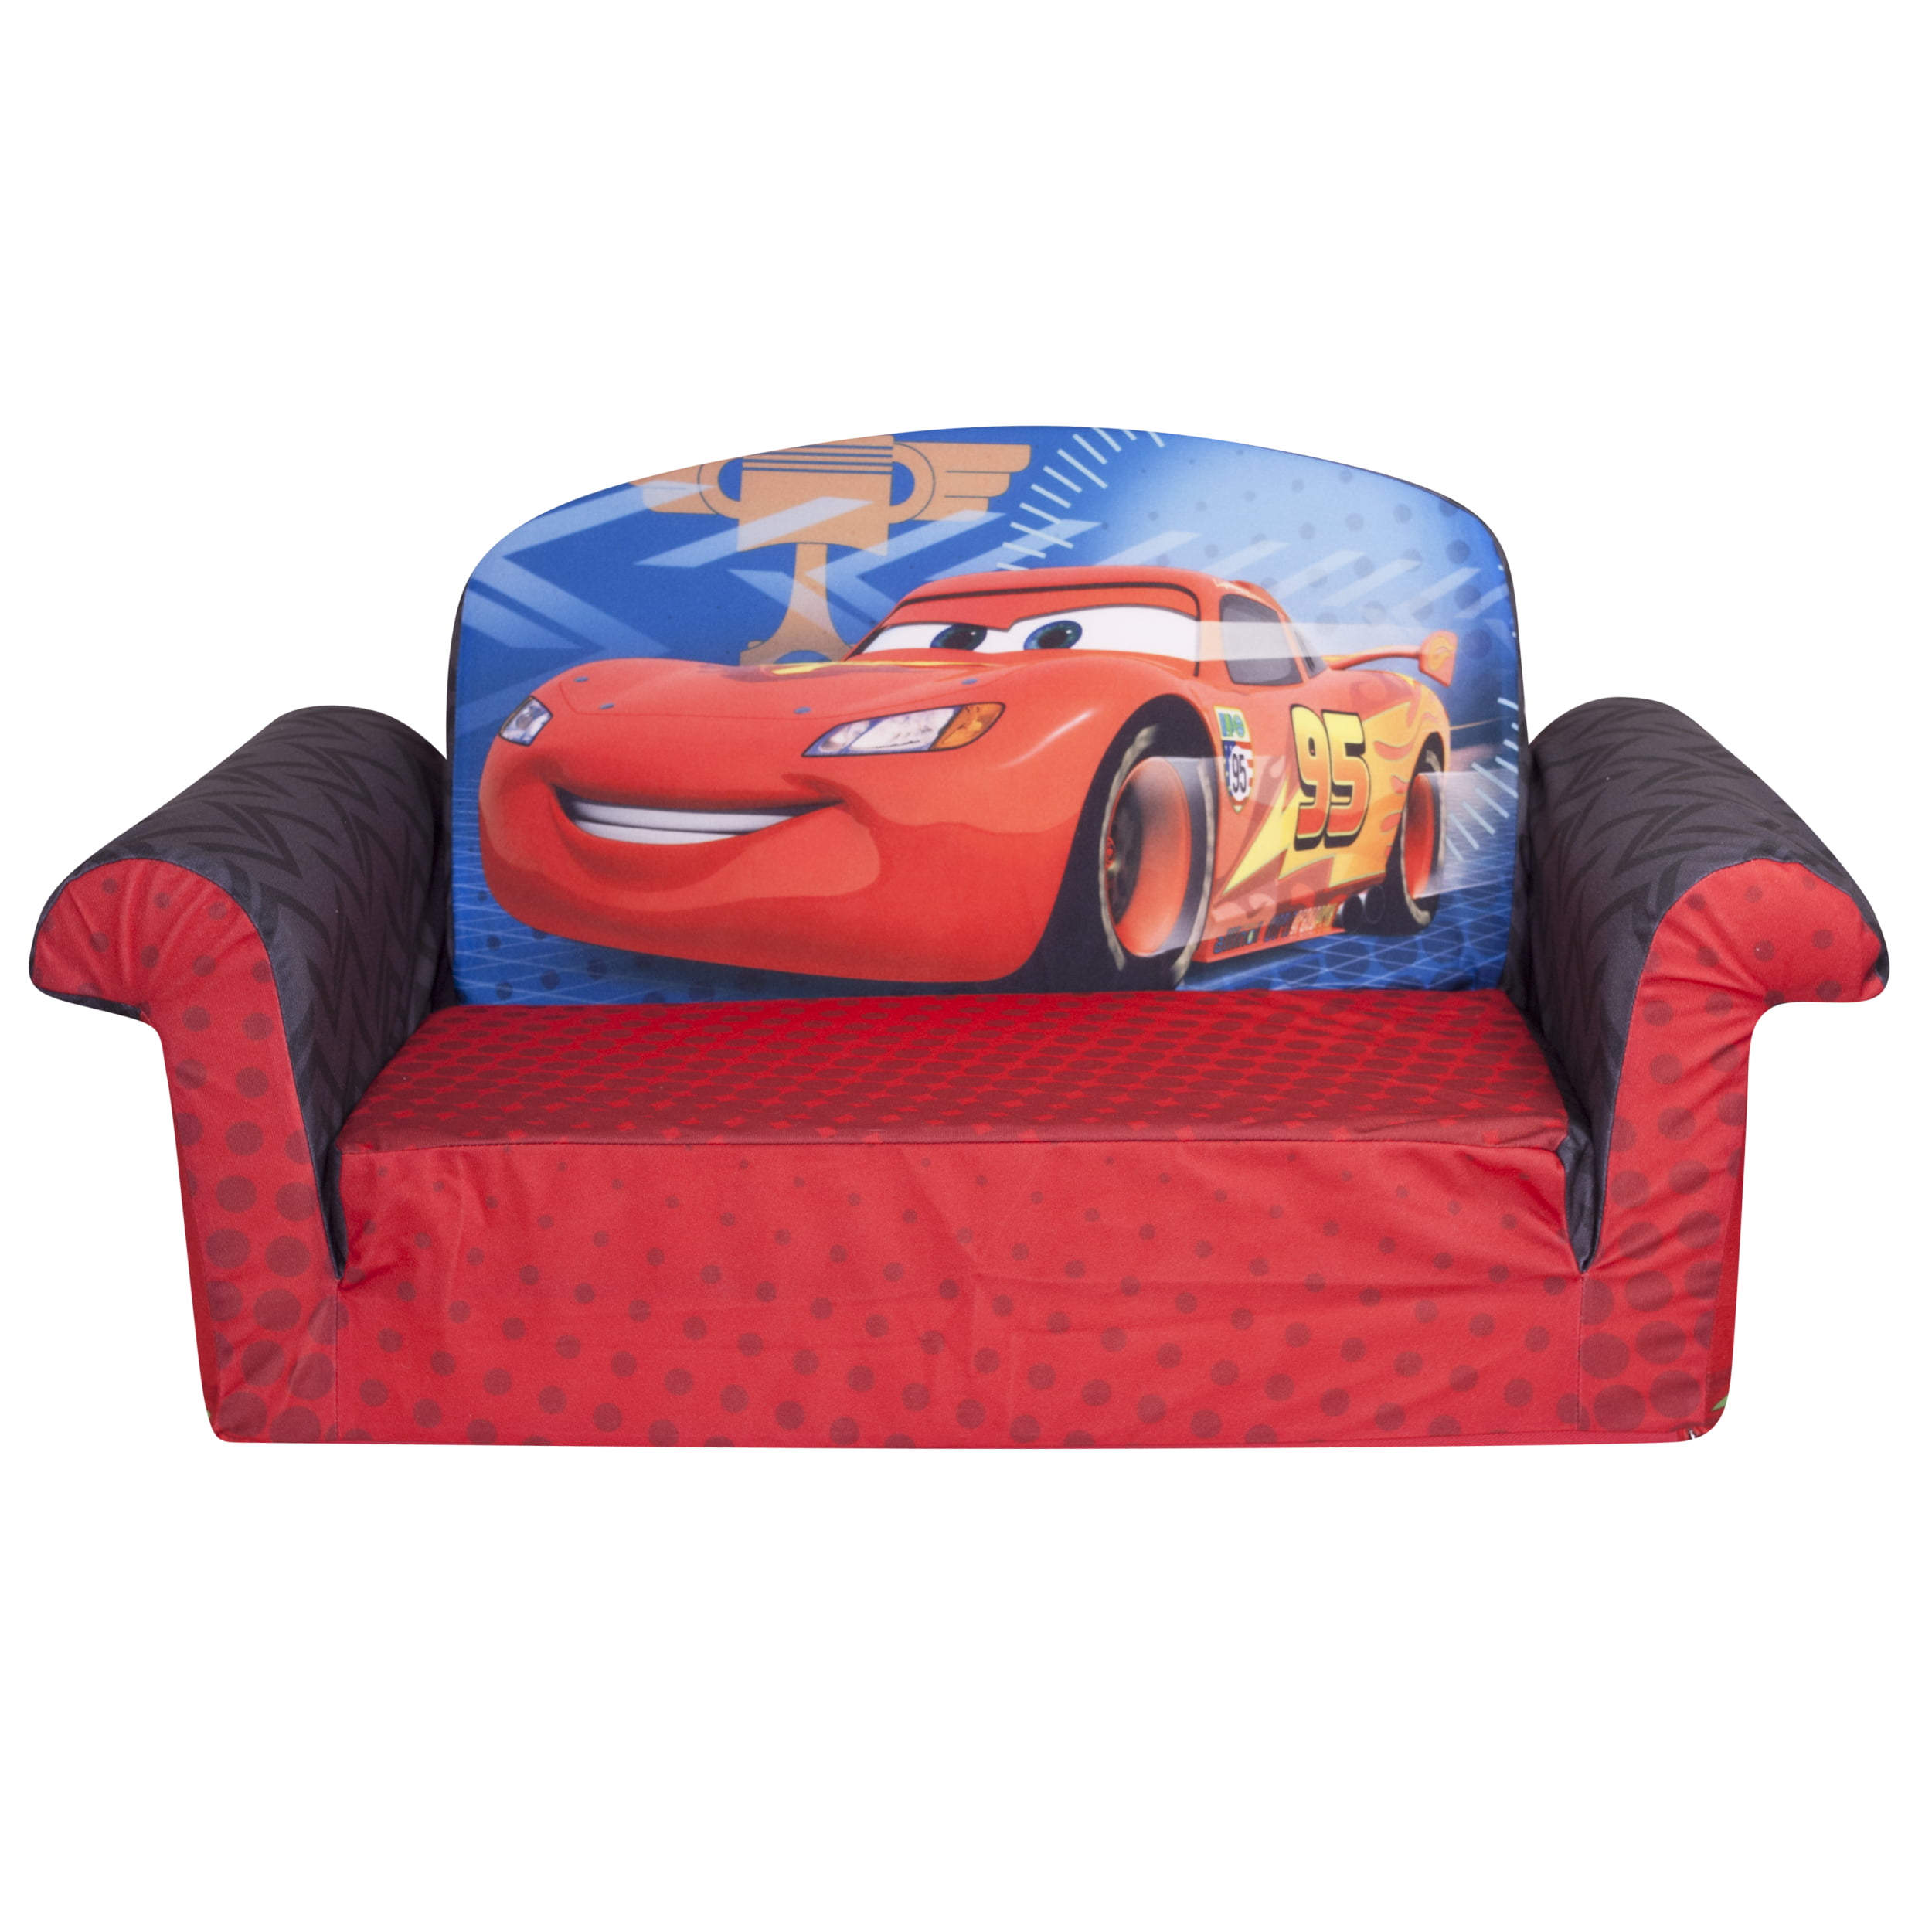 Marshmallow Furniture Children S 2 In 1 Flip Open Foam Sofa Disney Pixar Disney Pixar Cars 2 By Spin Master Walmart Com Walmart Com